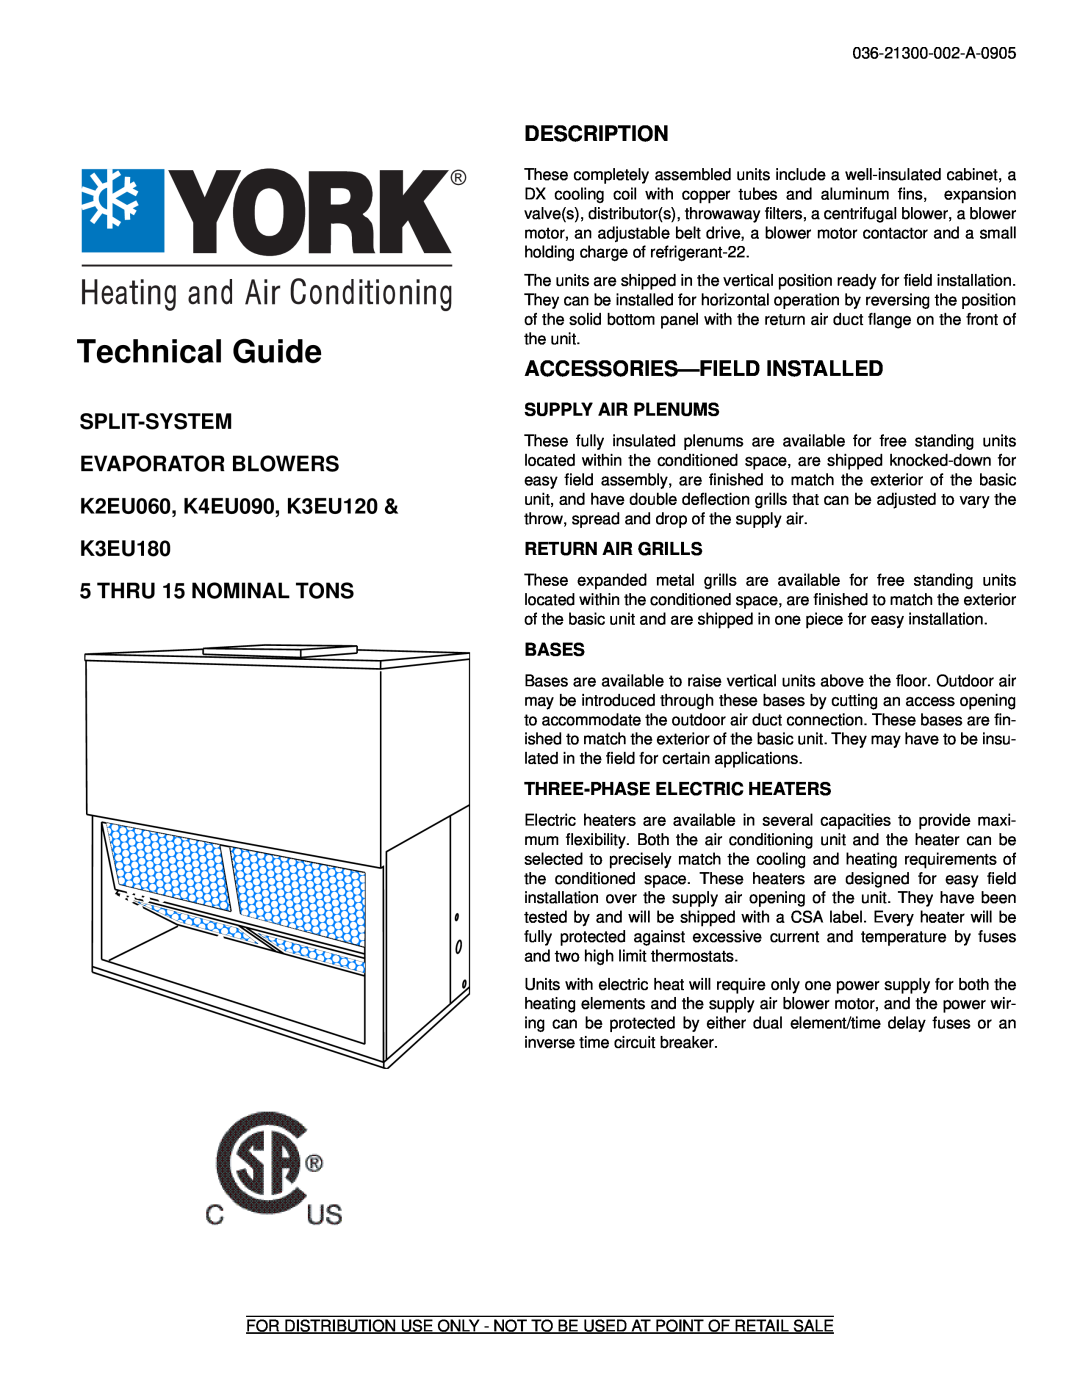 York K3EU120 manual Split-System Evaporator Blowers, K3EU180 5 THRU 15 NOMINAL TONS, Description, Supply Air Plenums 